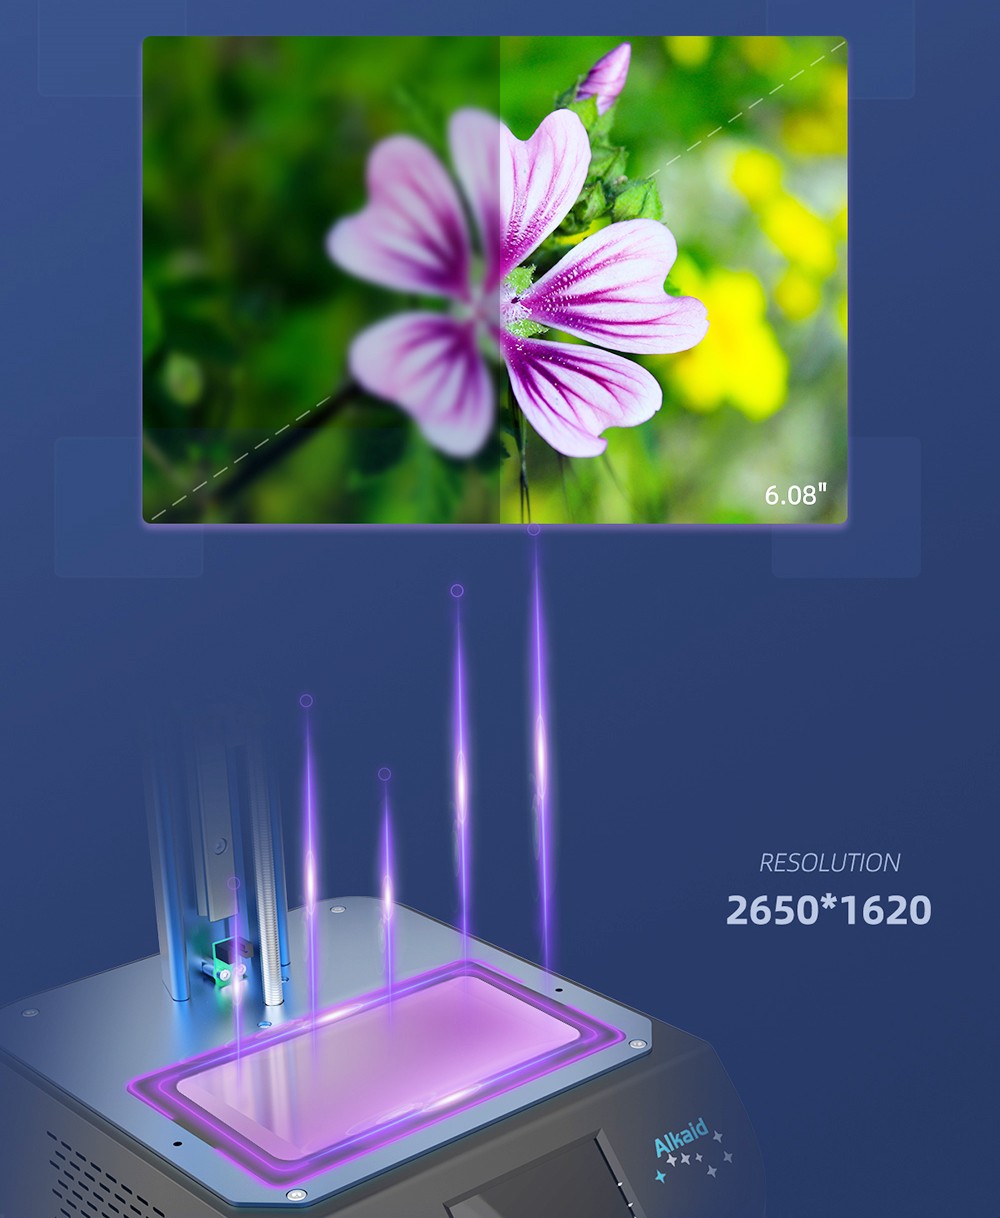 Geeetech Alkaid LCD Light Curing Resin 3D Printer พร้อมหน้าจอสัมผัสขนาด 3.5 นิ้วและ UV Photocuring, 82x130x190mm